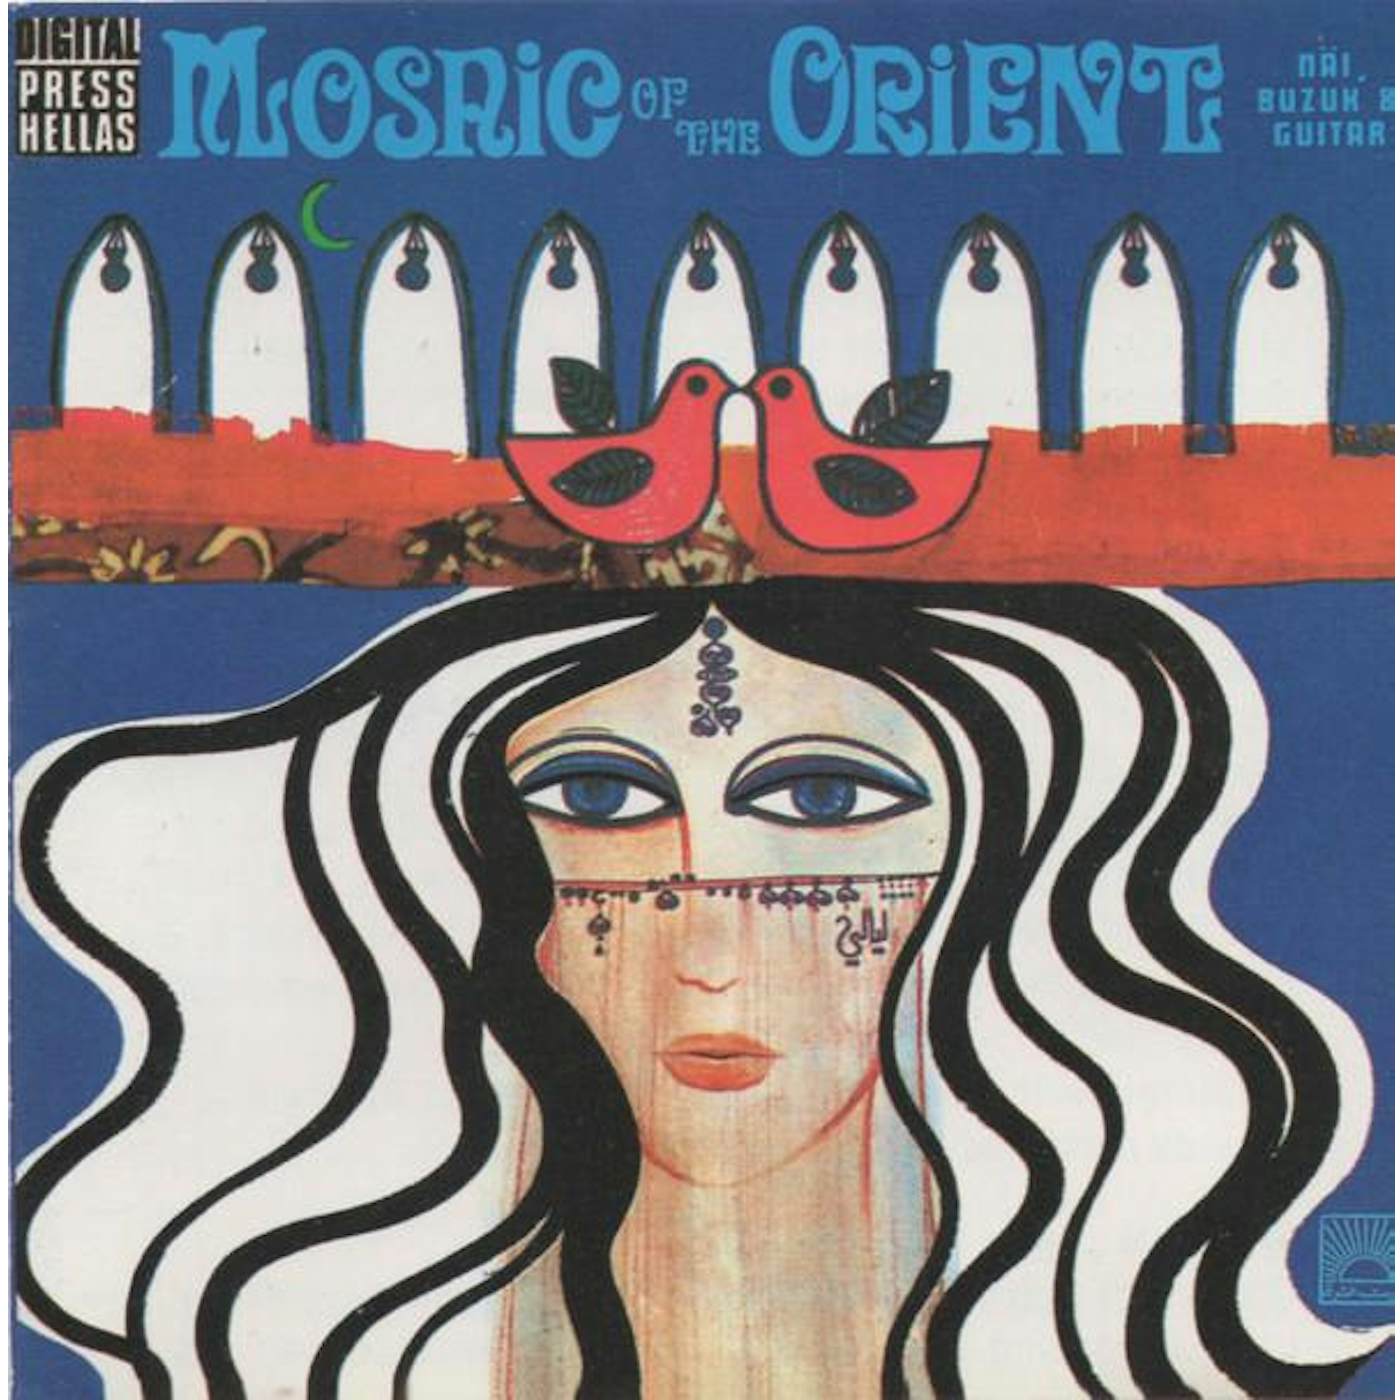 Elias Rahbani Mosaic Of The Orient Vinyl Record